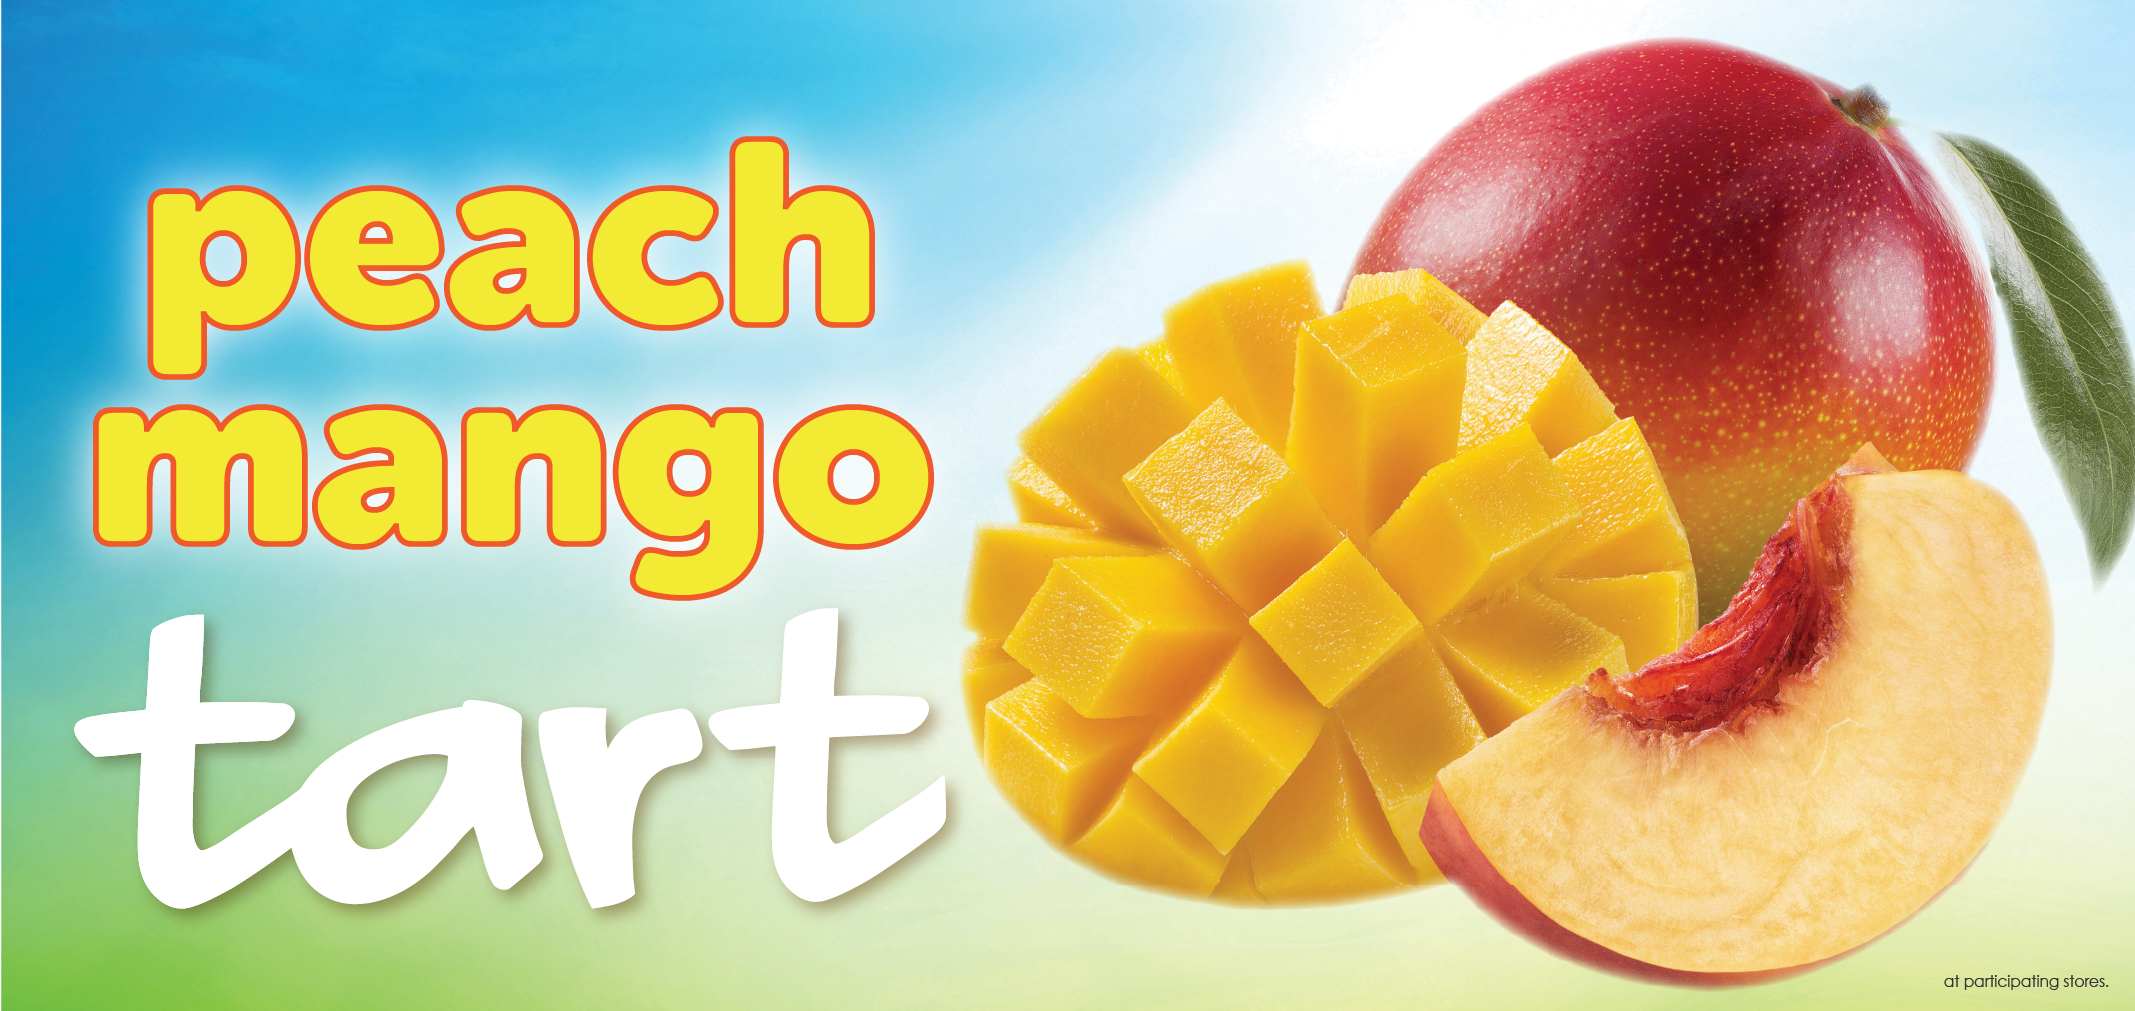 peach mango tart label image